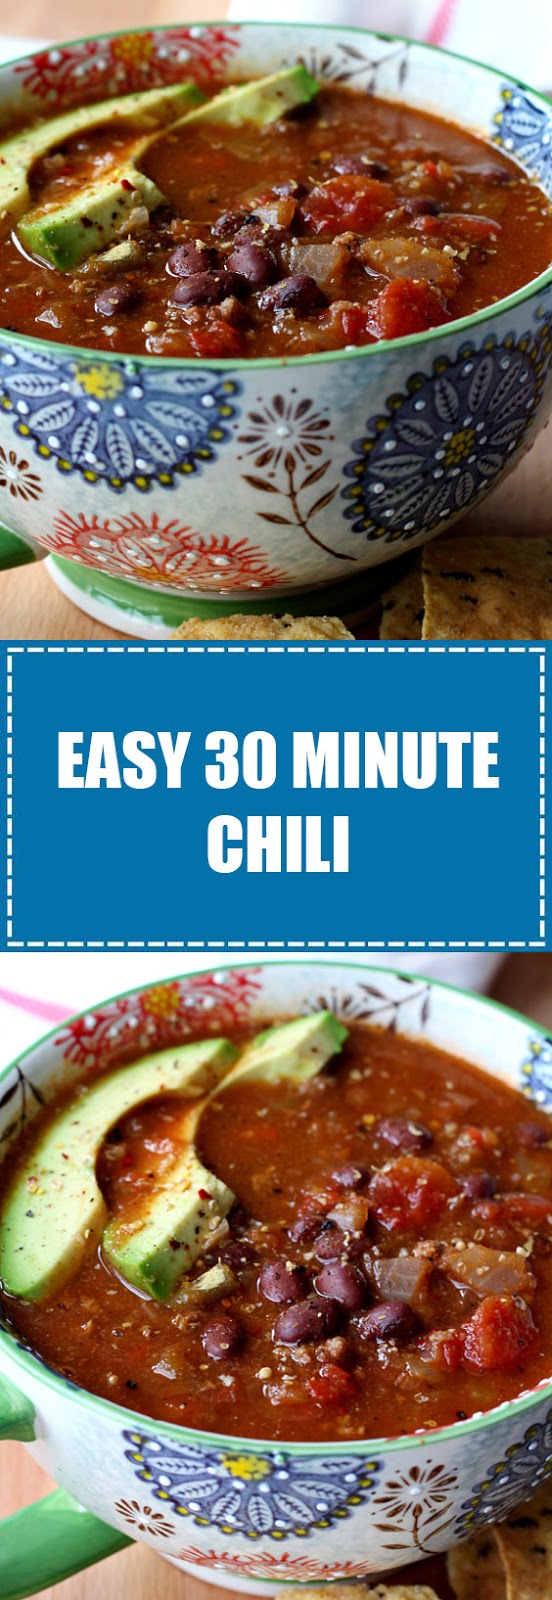 Easy 30 Minute Chili